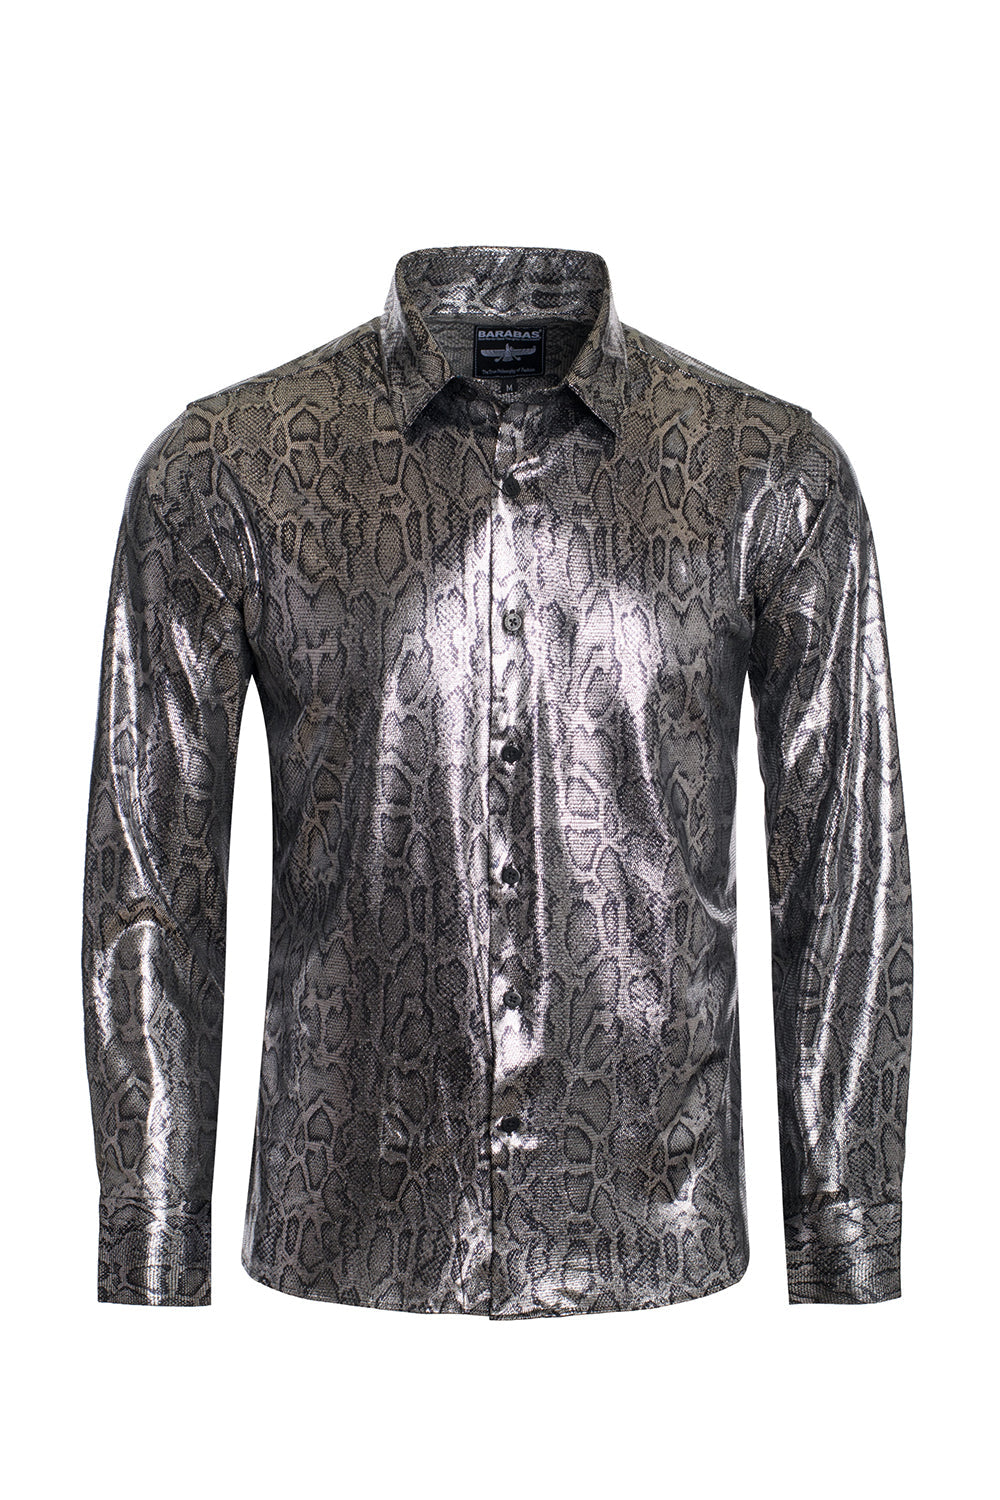 Barabas Men's Snake Glossy Print Button Down Long Sleeve Shirt B311